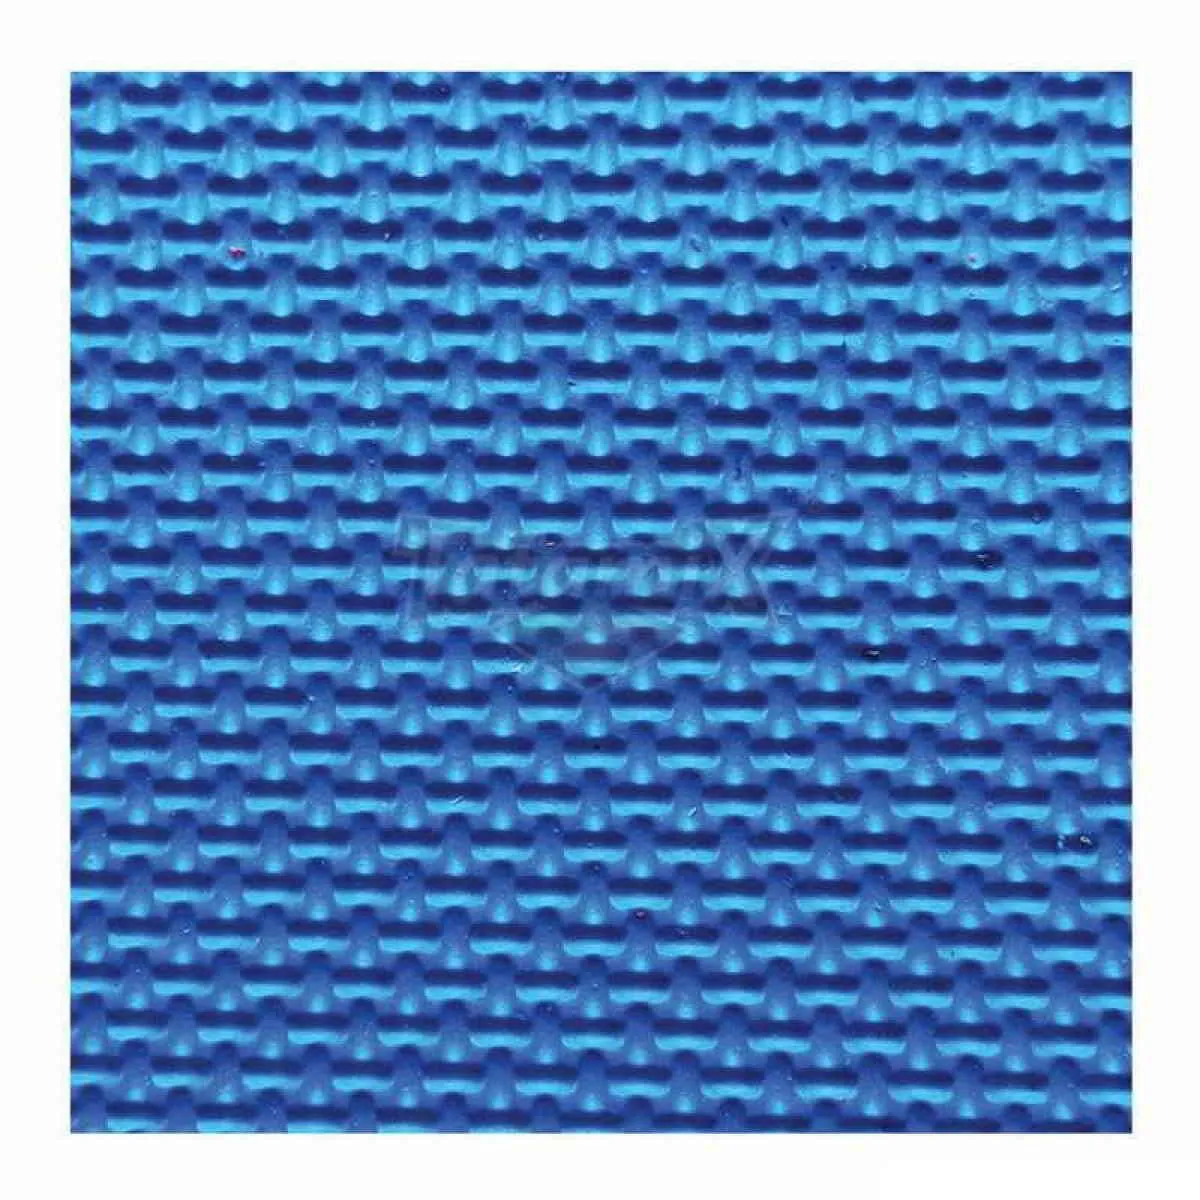 KampfsportmatteTatami E20X blau/schwarz 100 cm x 100 cm x 2,1 cm